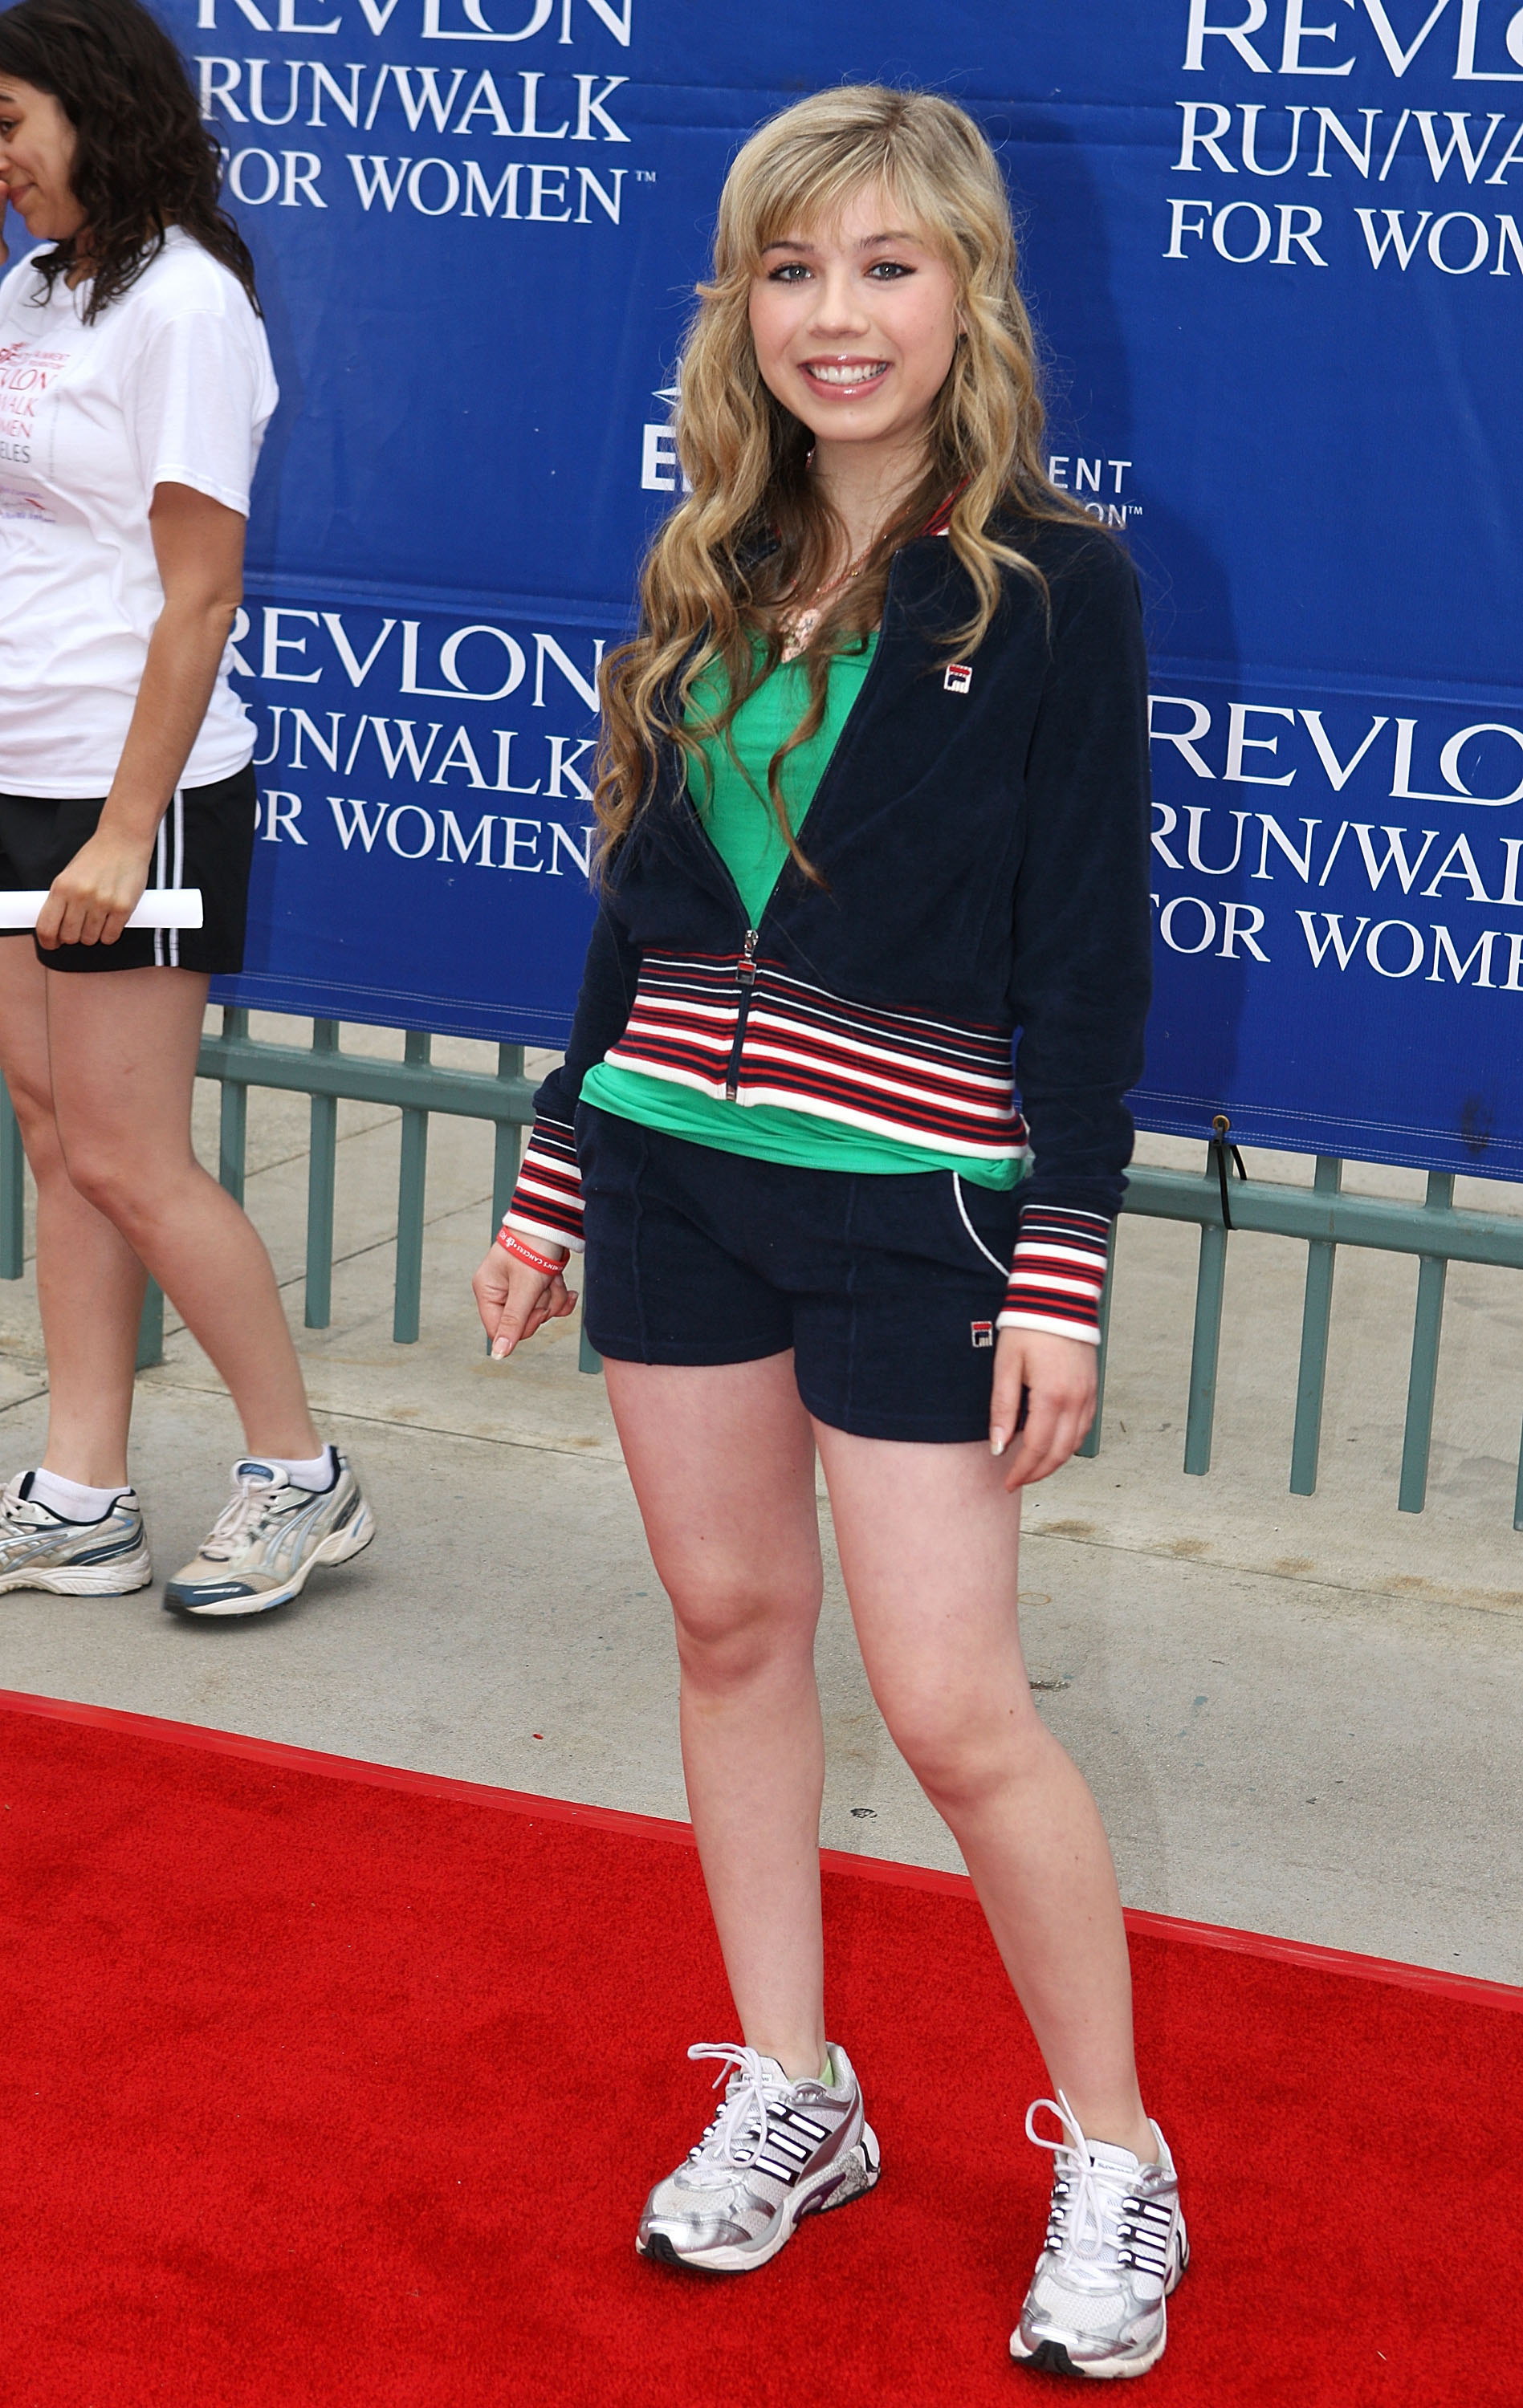 Jennette McCurdy besucht den 15th Annual Entertainment Industry Foundation's Revlon Run/Walk am 9. Mai 2008 | Quelle: Getty Images